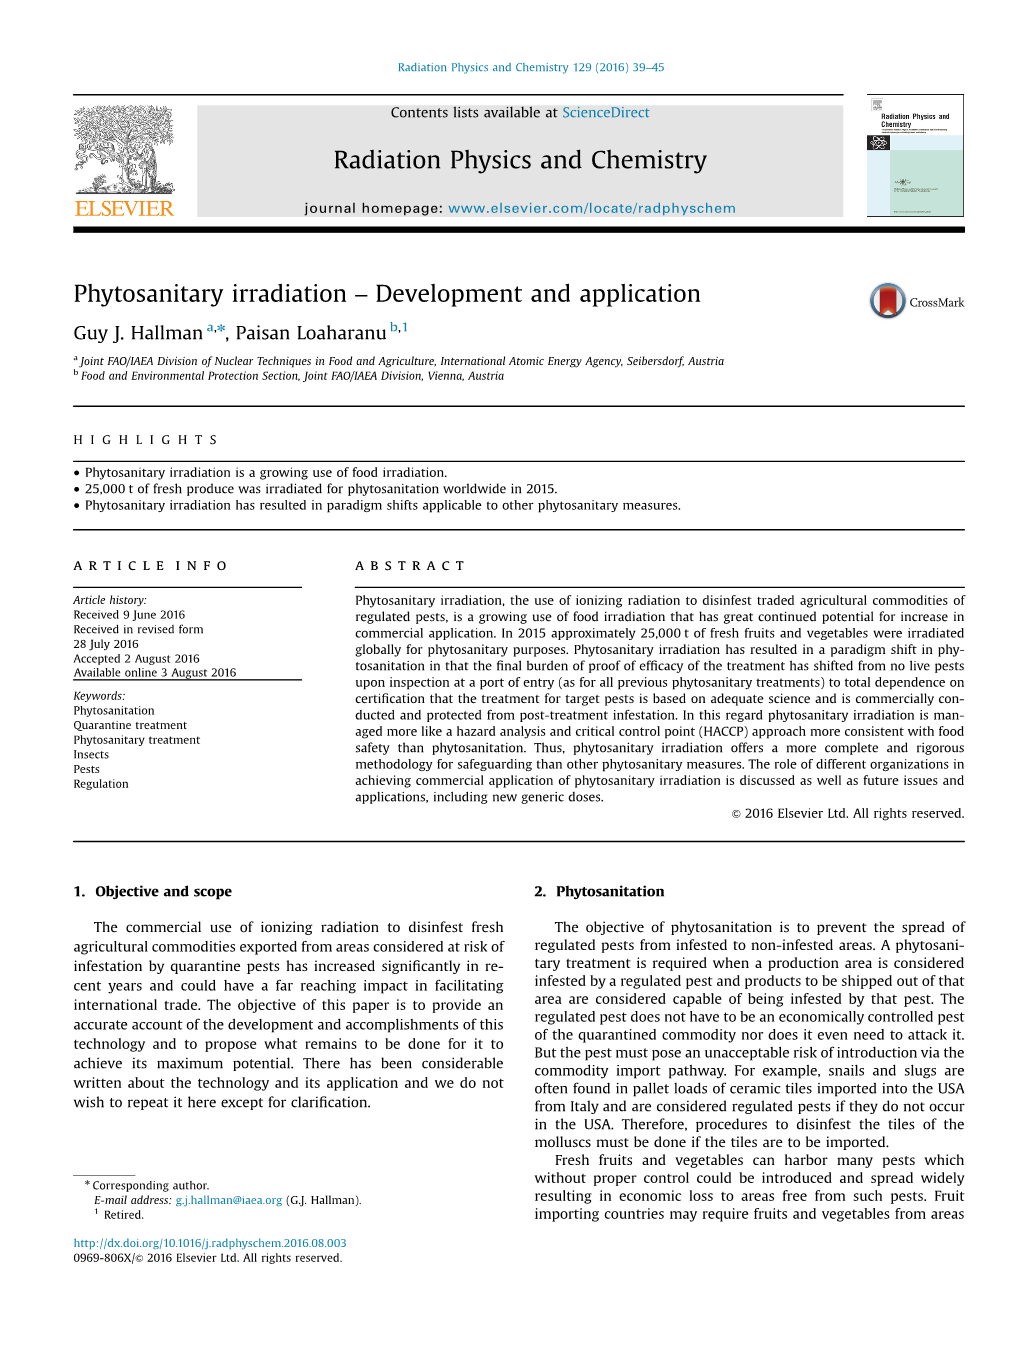 Phytosanitary Irradiation – Development and Application